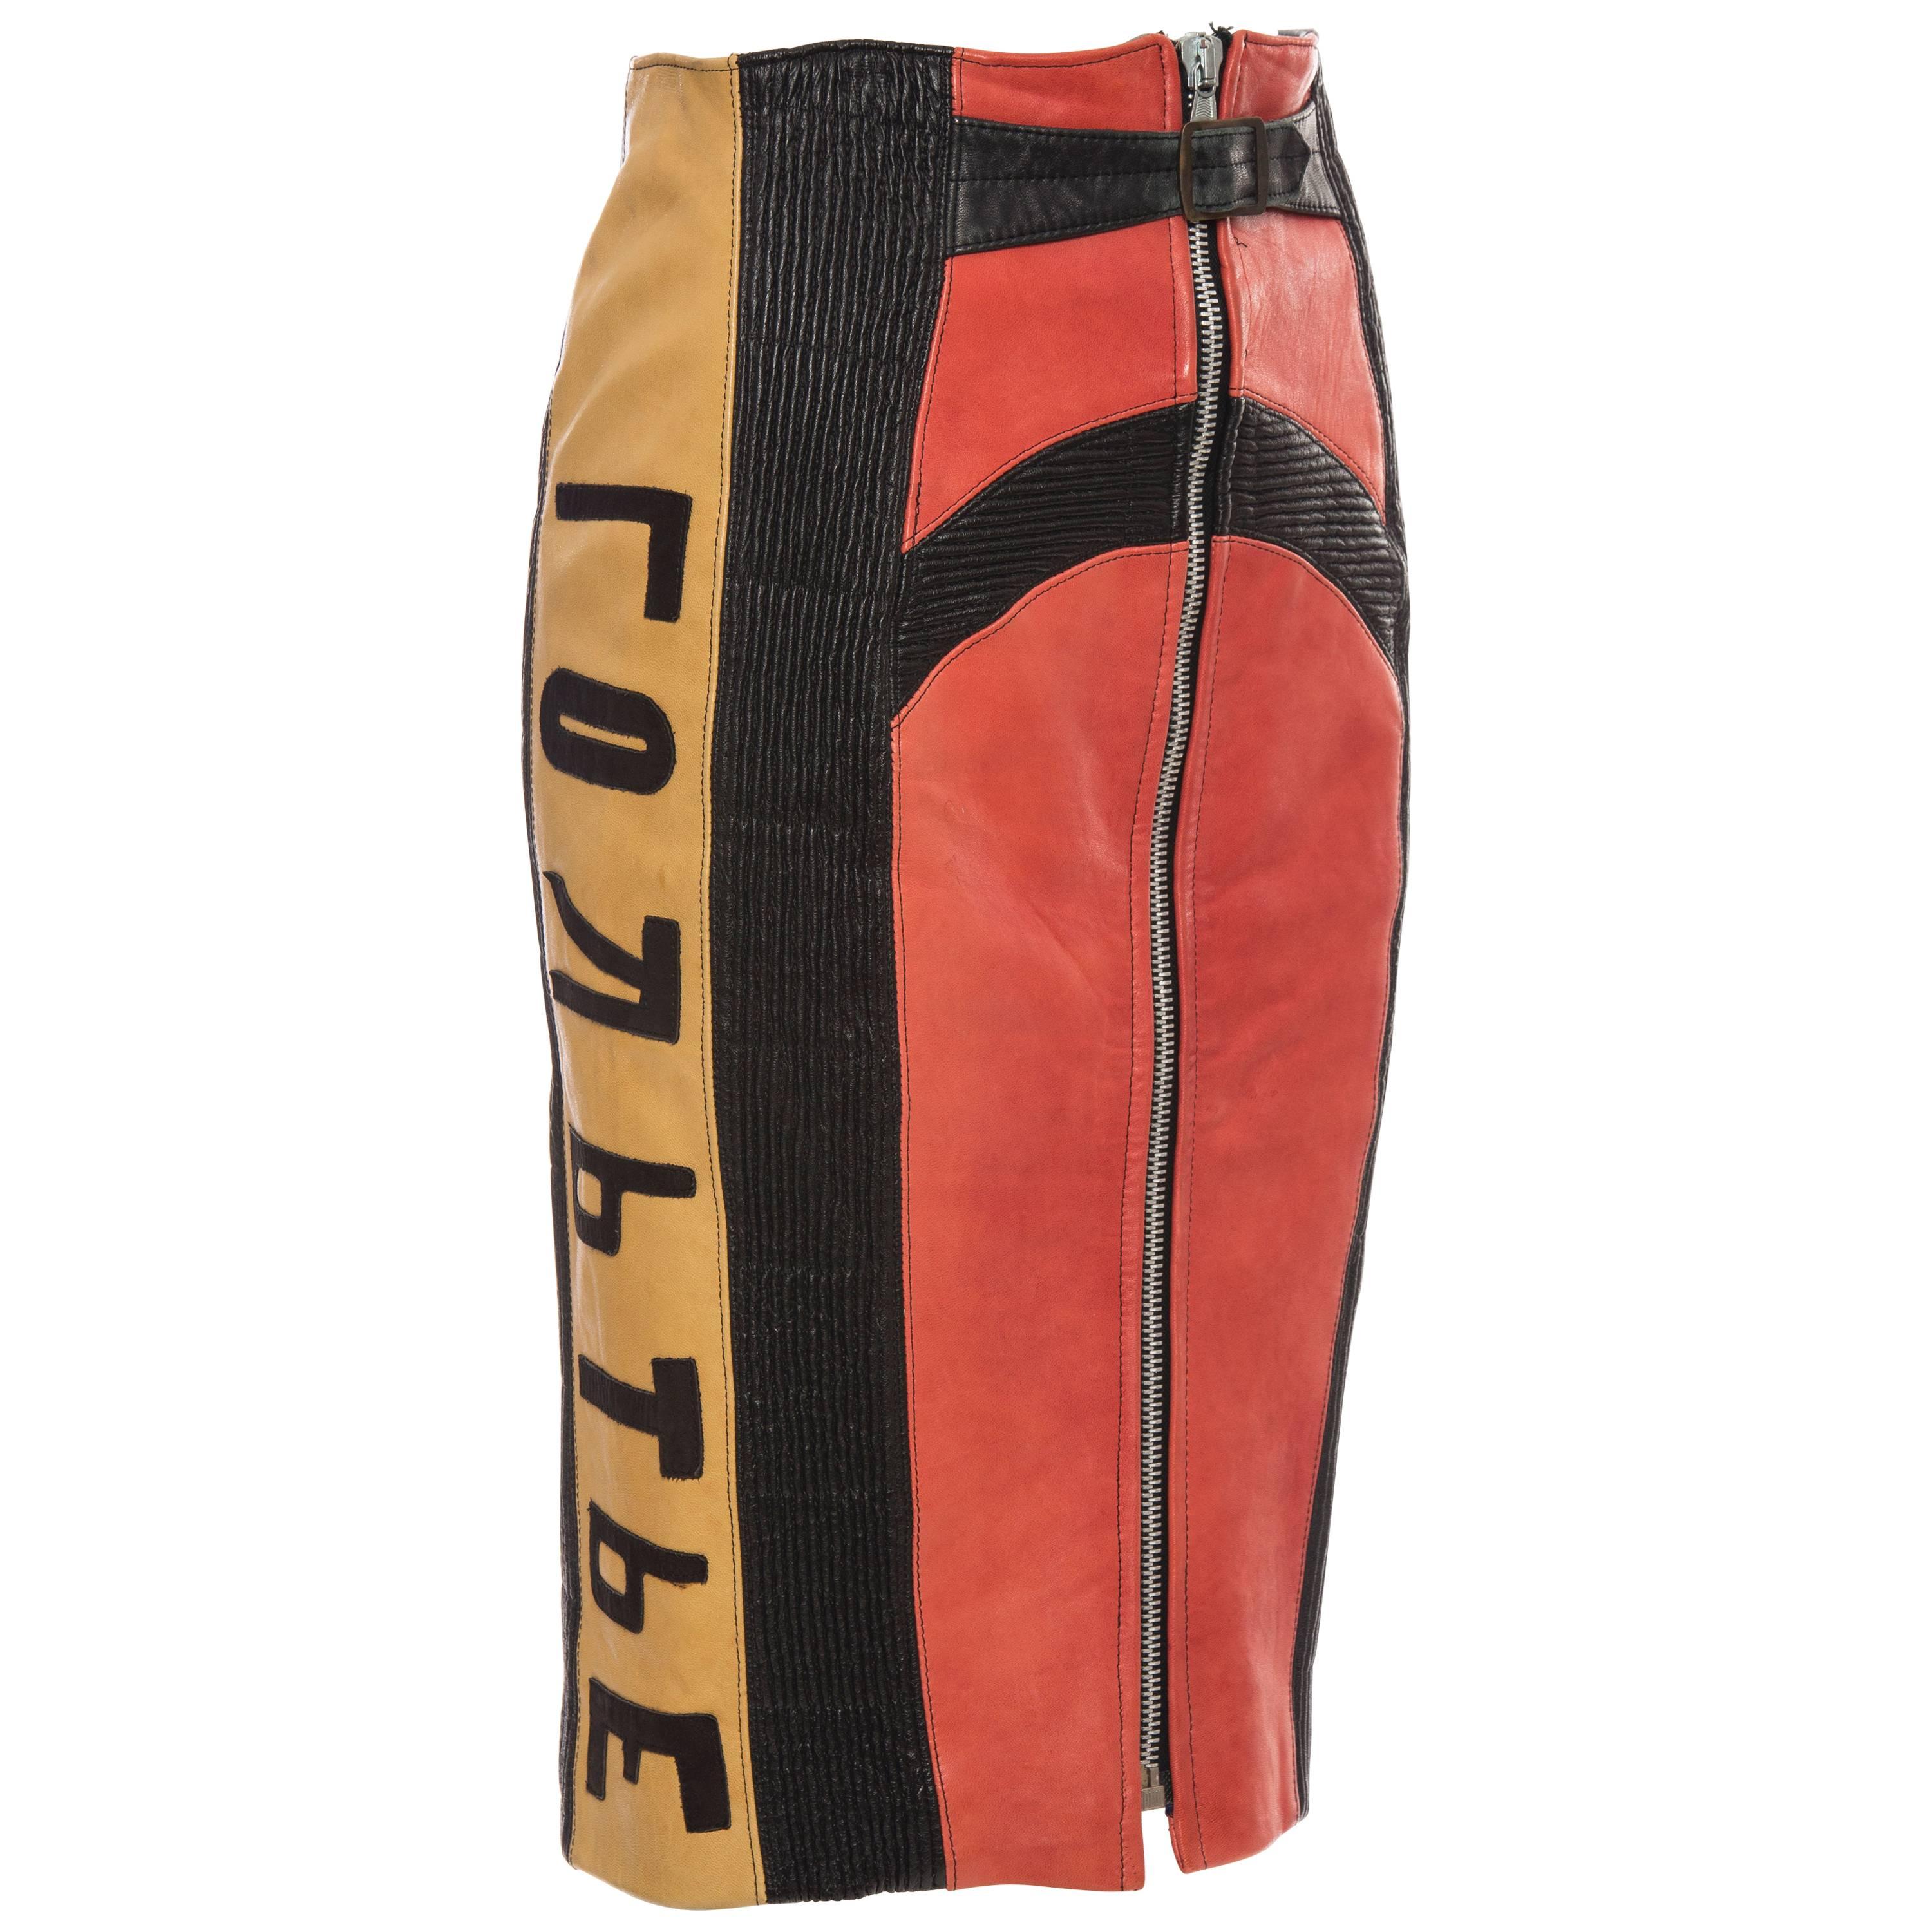 Jean Paul Gaultier 'Russian Constructivist' Leather Skirt, Autumn - Winter 1986 For Sale